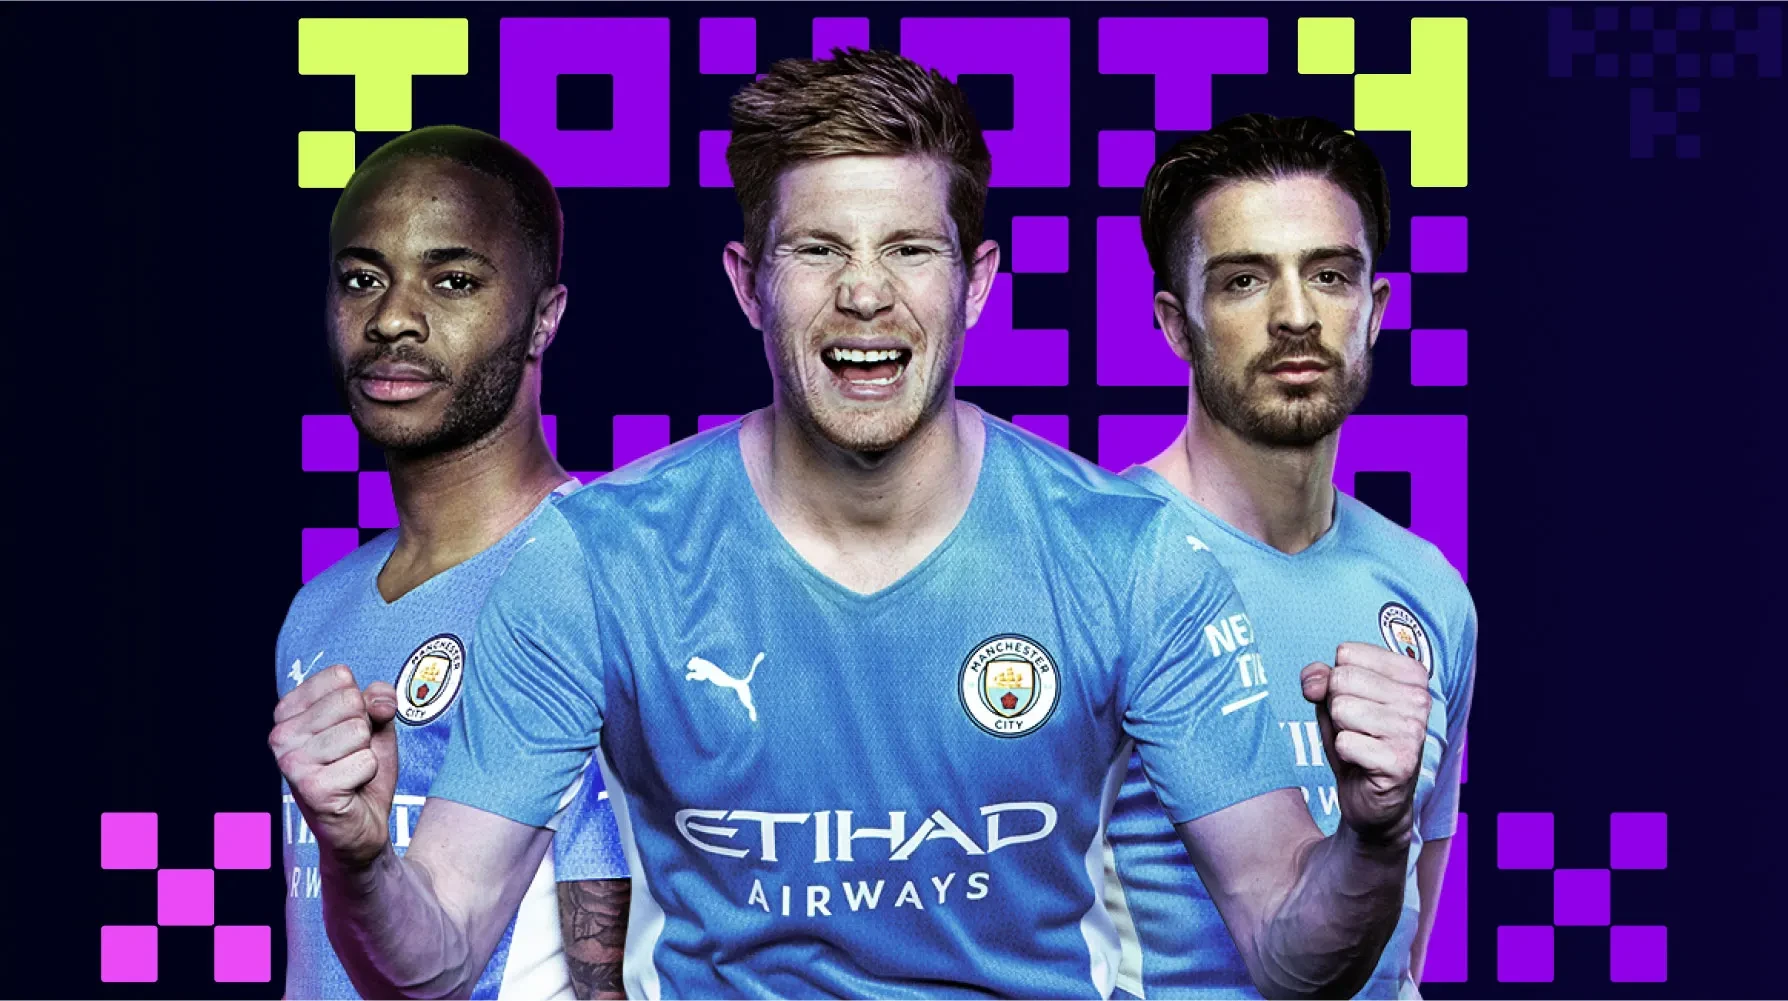 Club: Manchester City